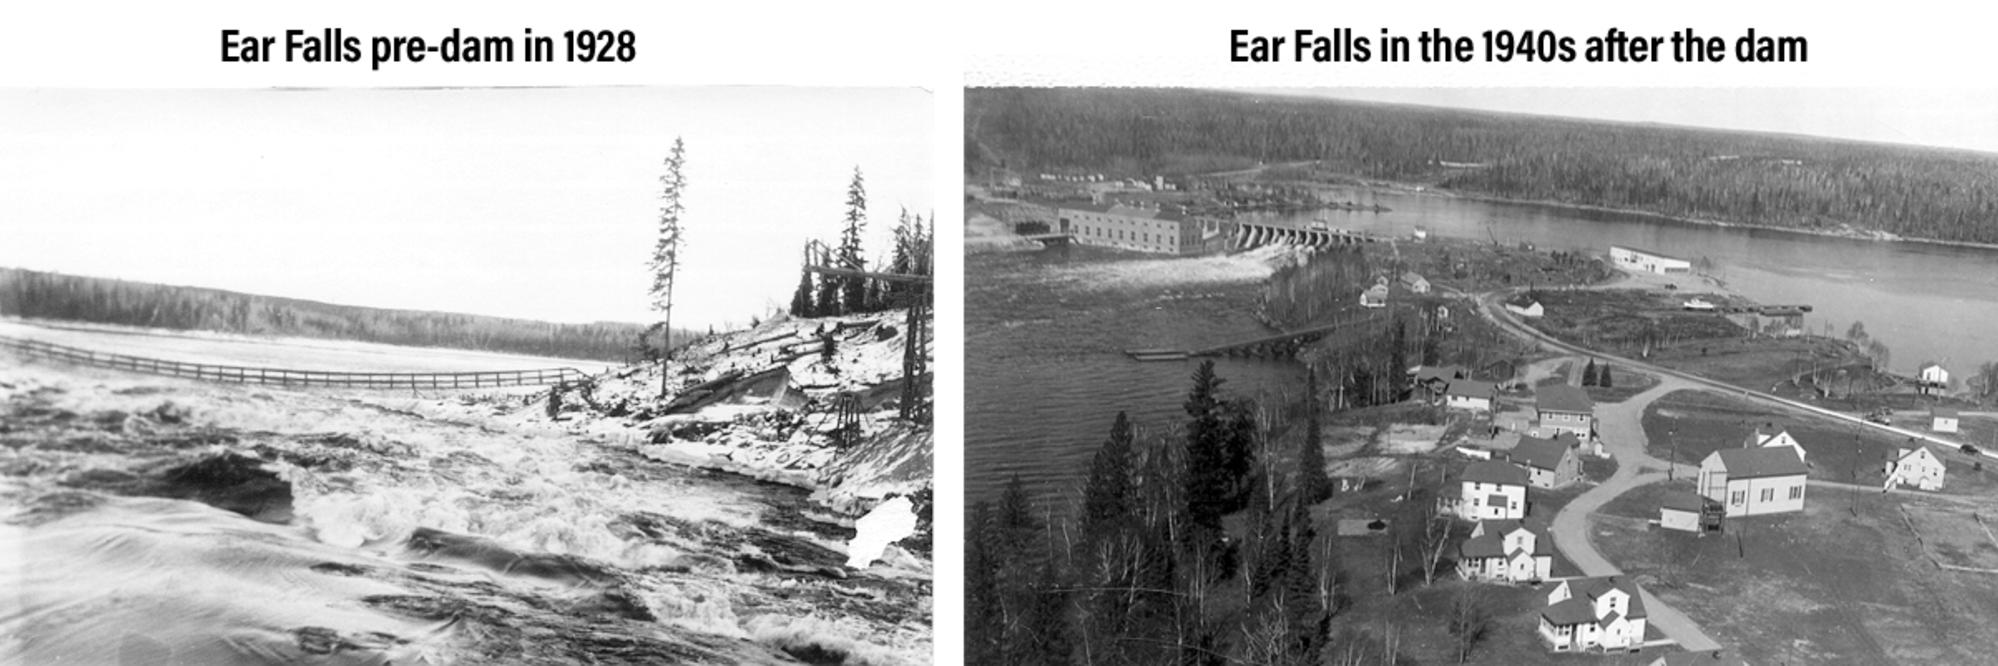 Ear Falls after Dam